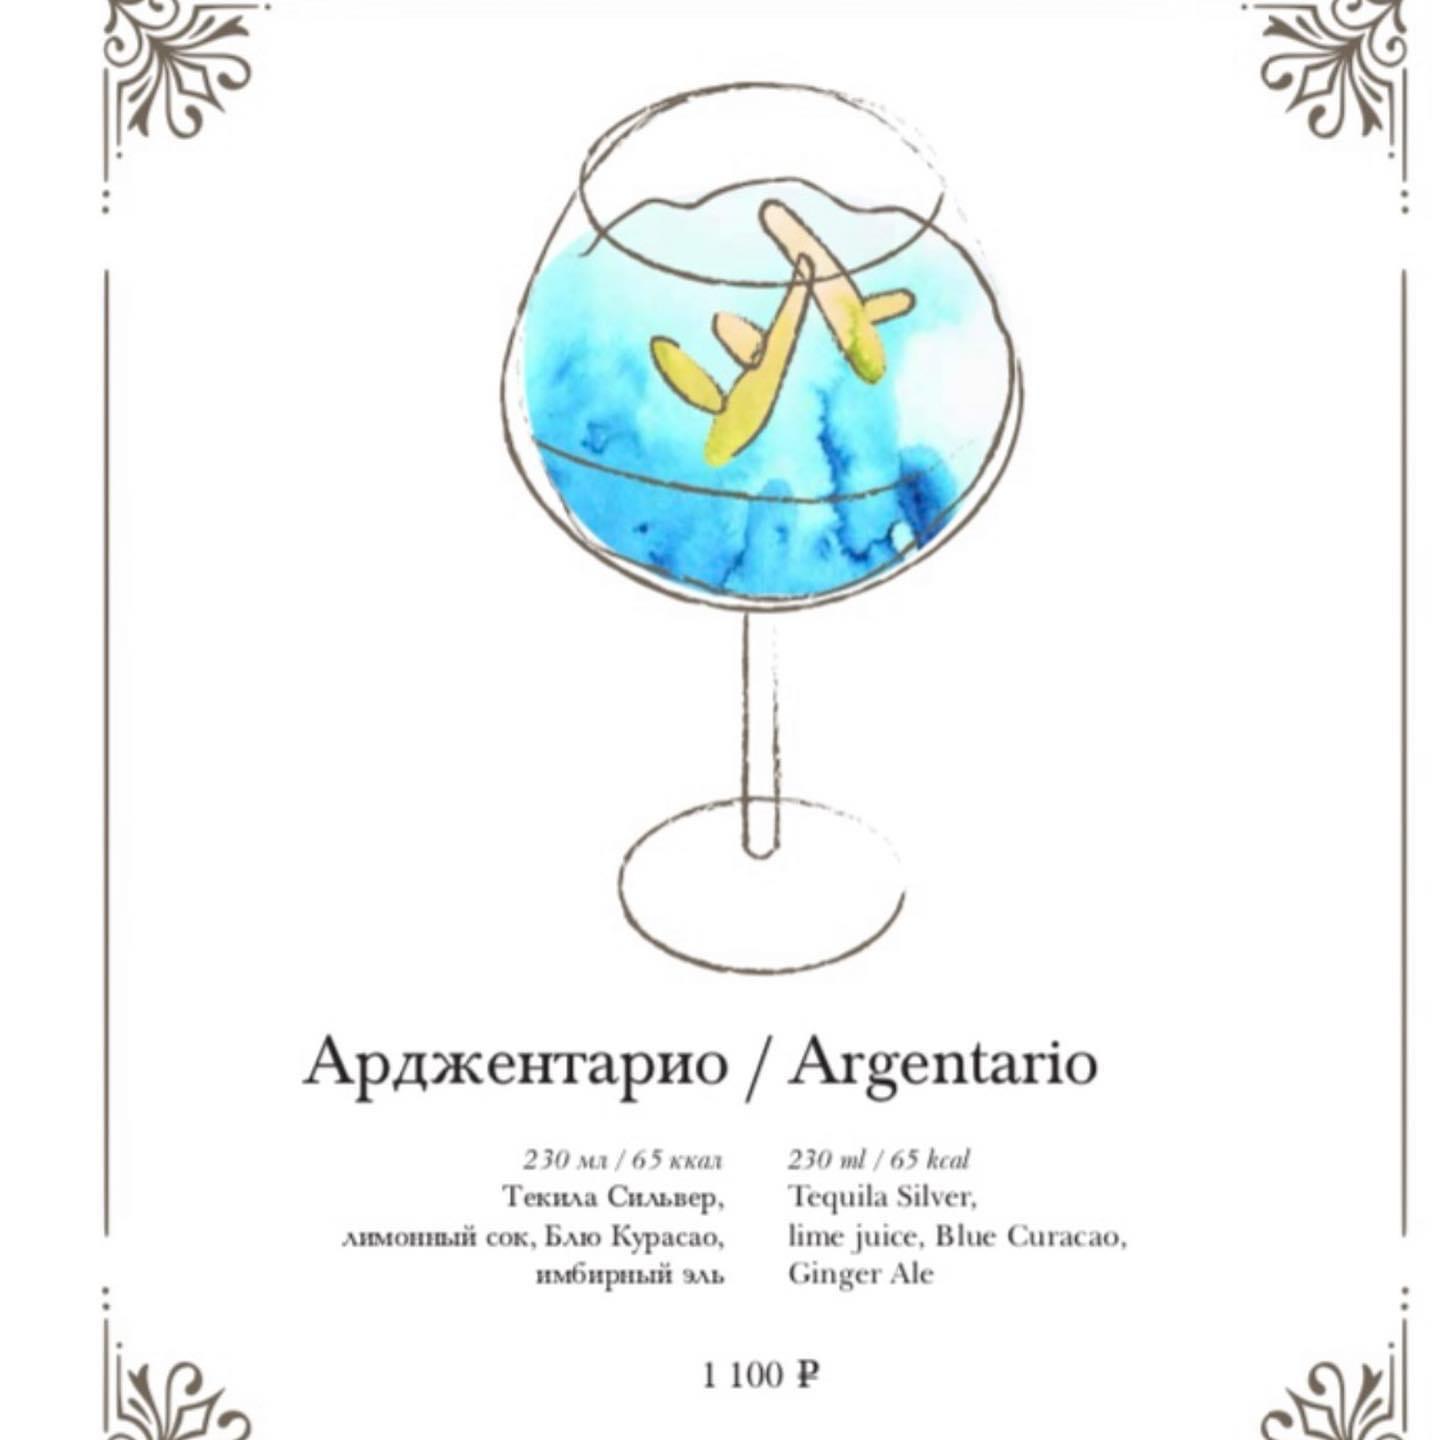 Francesco-Porcelli-Argentario-cocktail-1